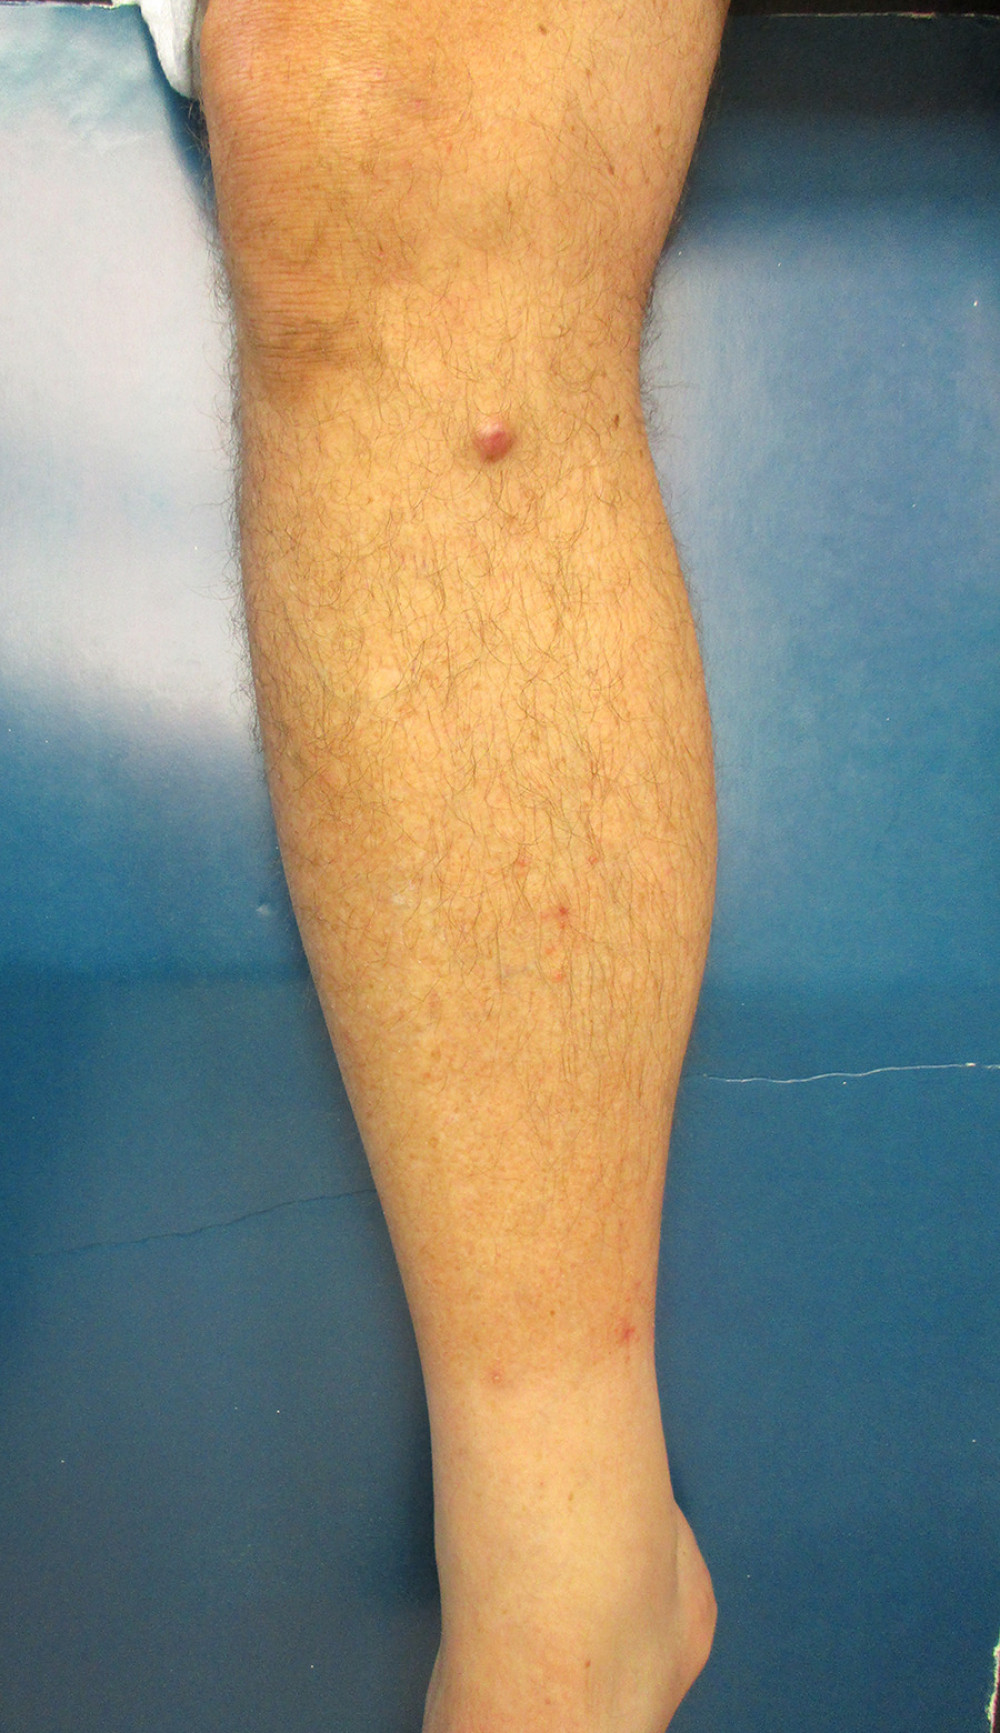 Asymptomatic lesion on the lower leg.